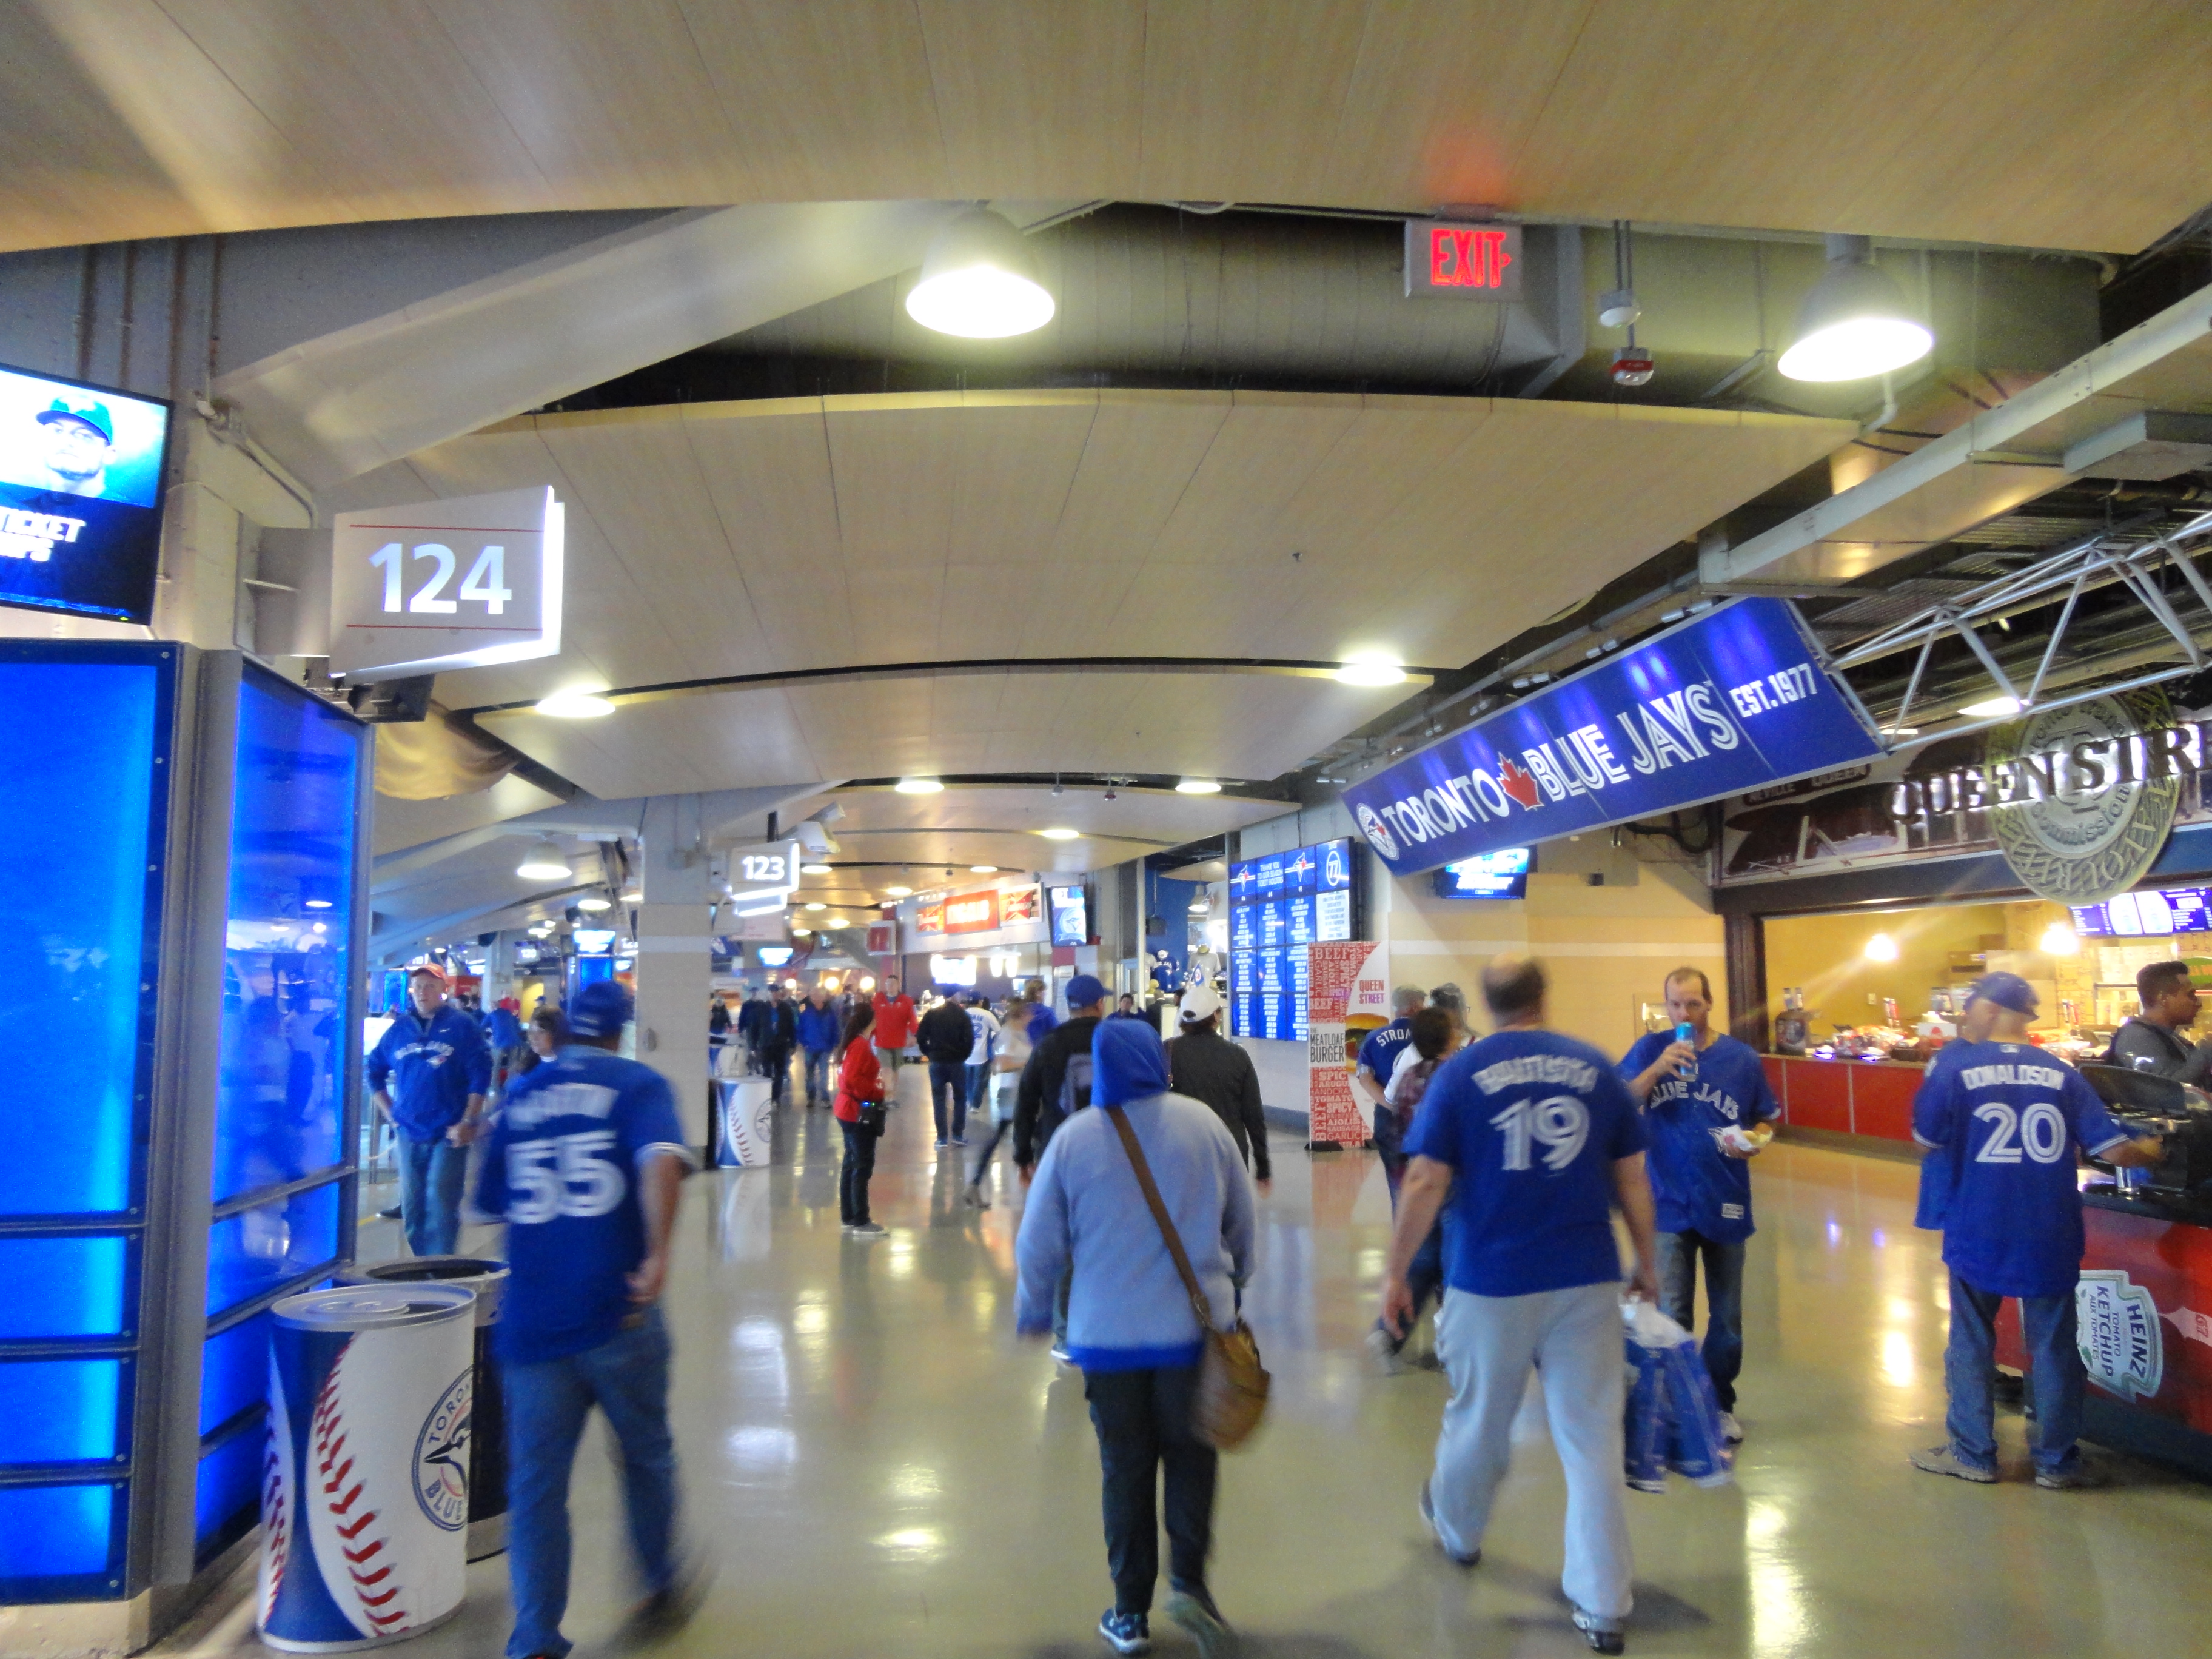 Rogers Centre – The Toronto Blue Jays